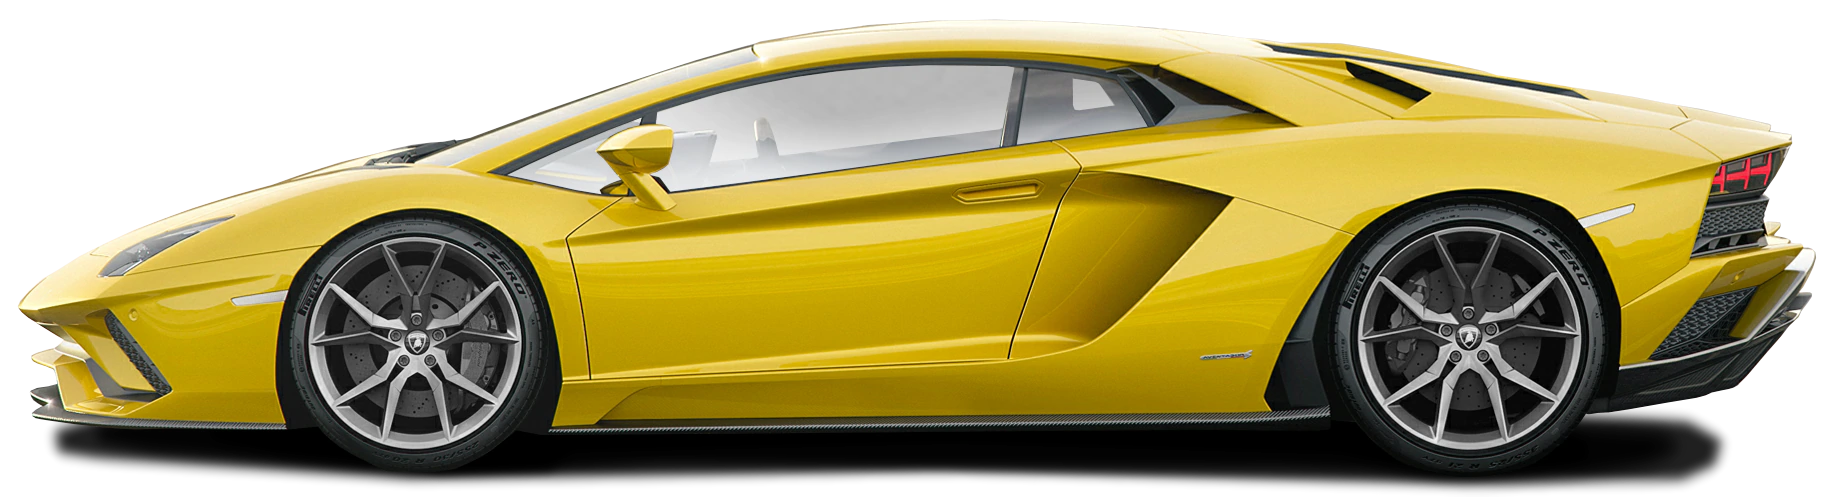 Makukulay na Side View Lamborghini PNG Image